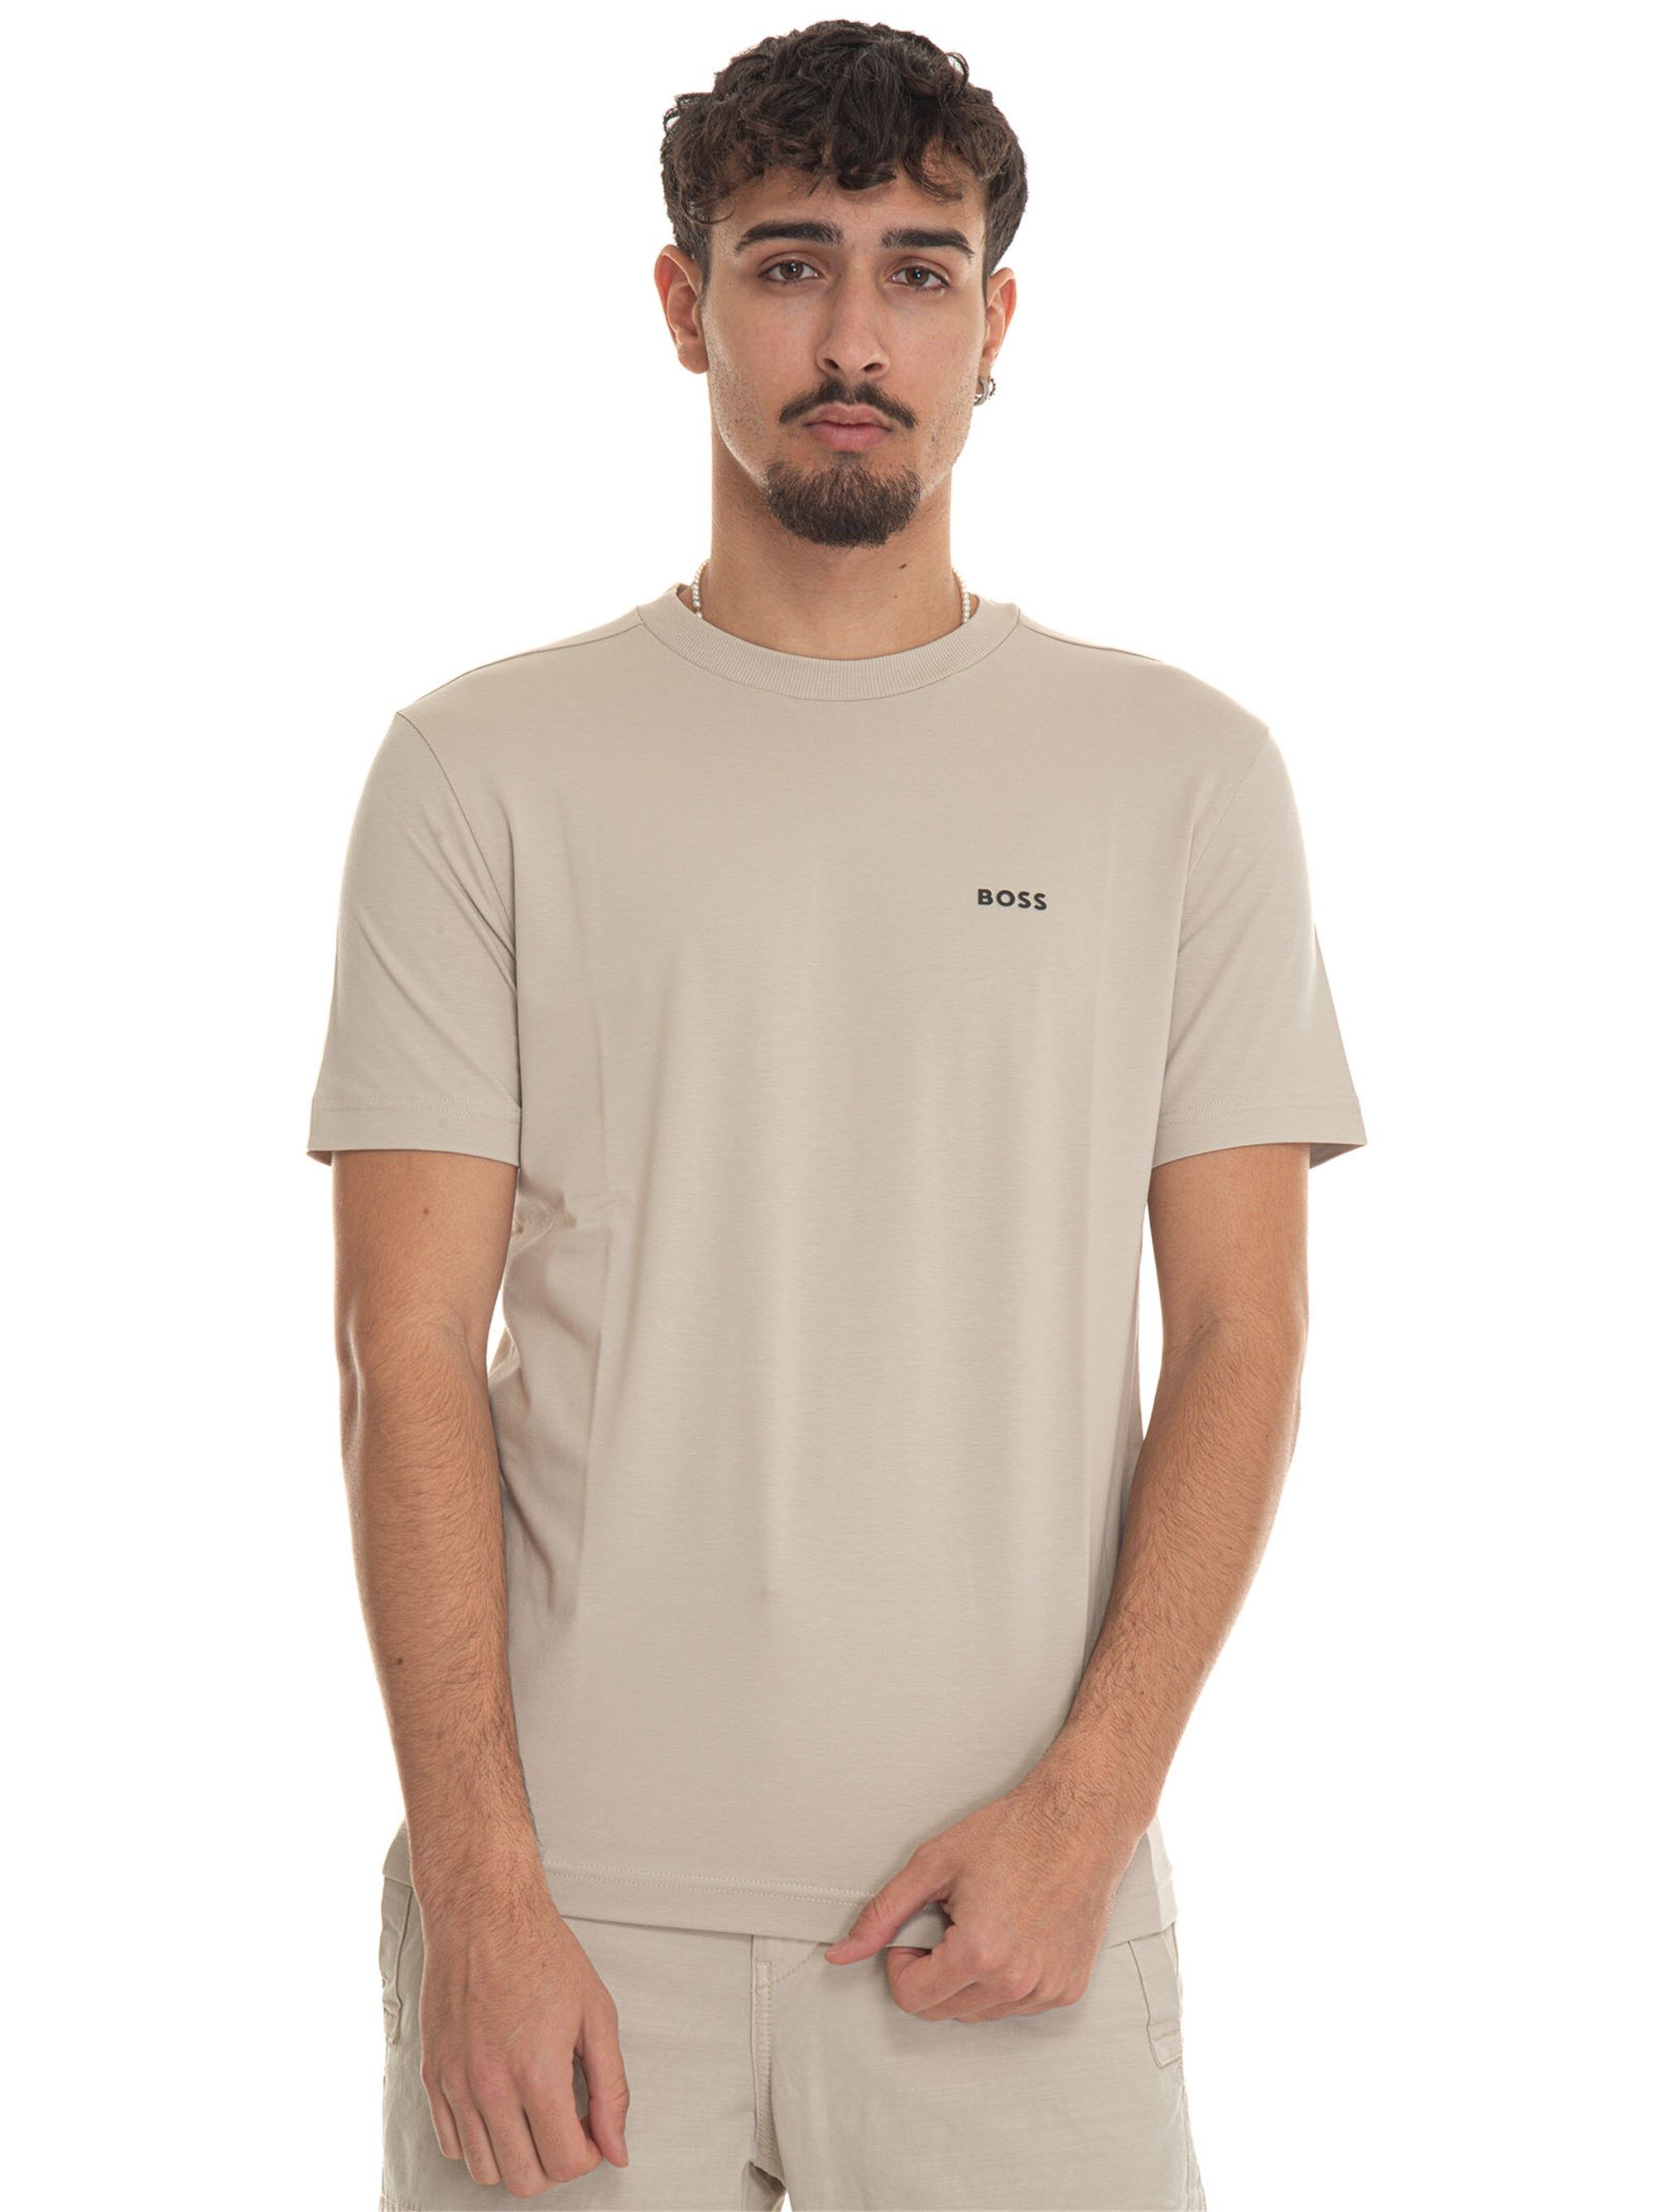 Boss T-shirt girocollo Beige Uomo XL